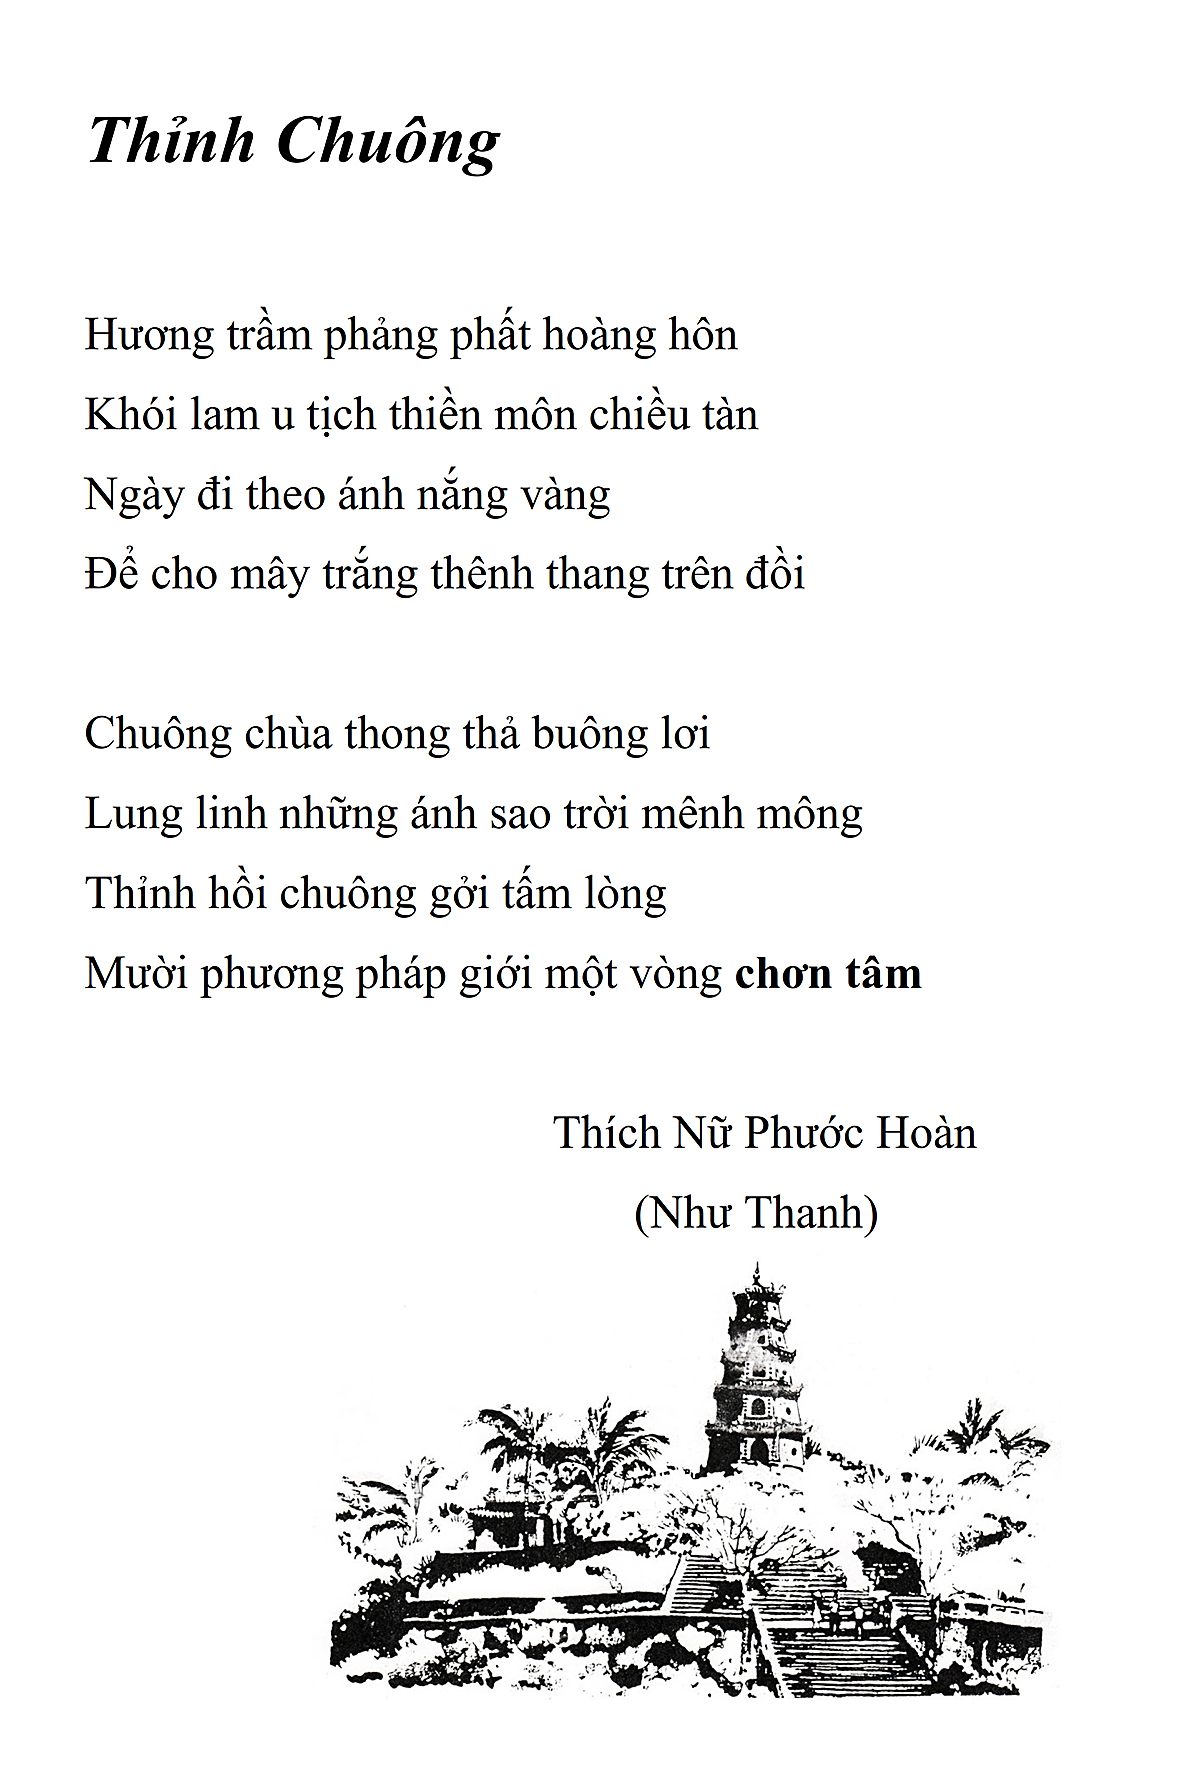 Thinh Chuong